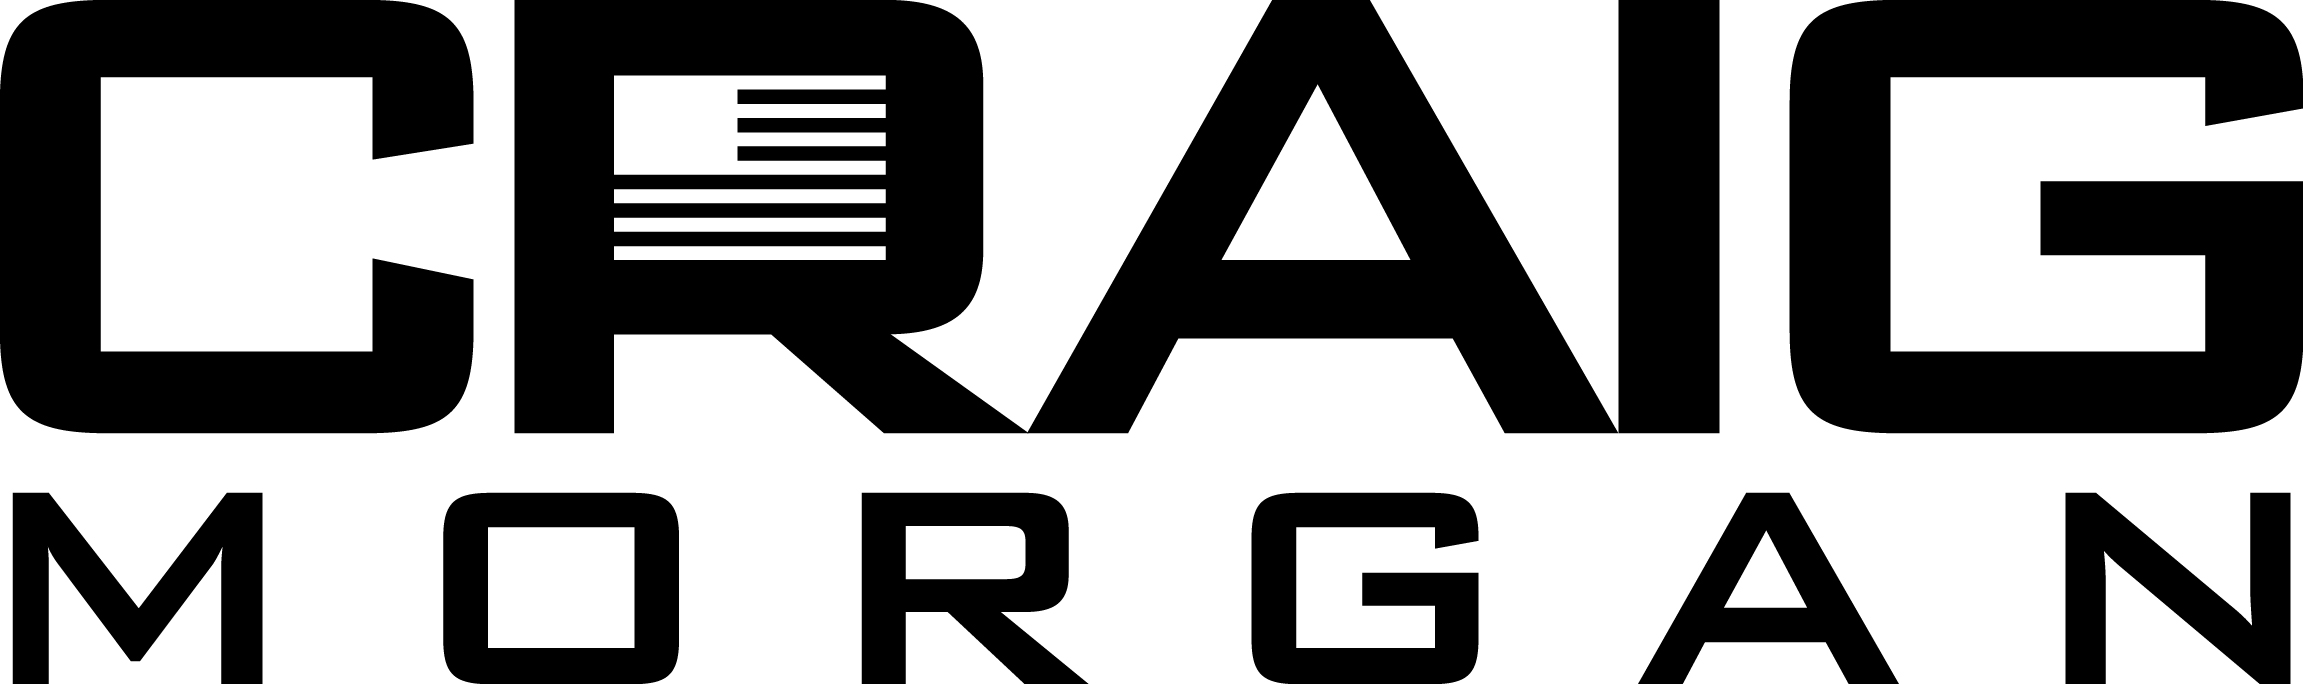 "Craig Morgan" log with flag icon inside the "R"